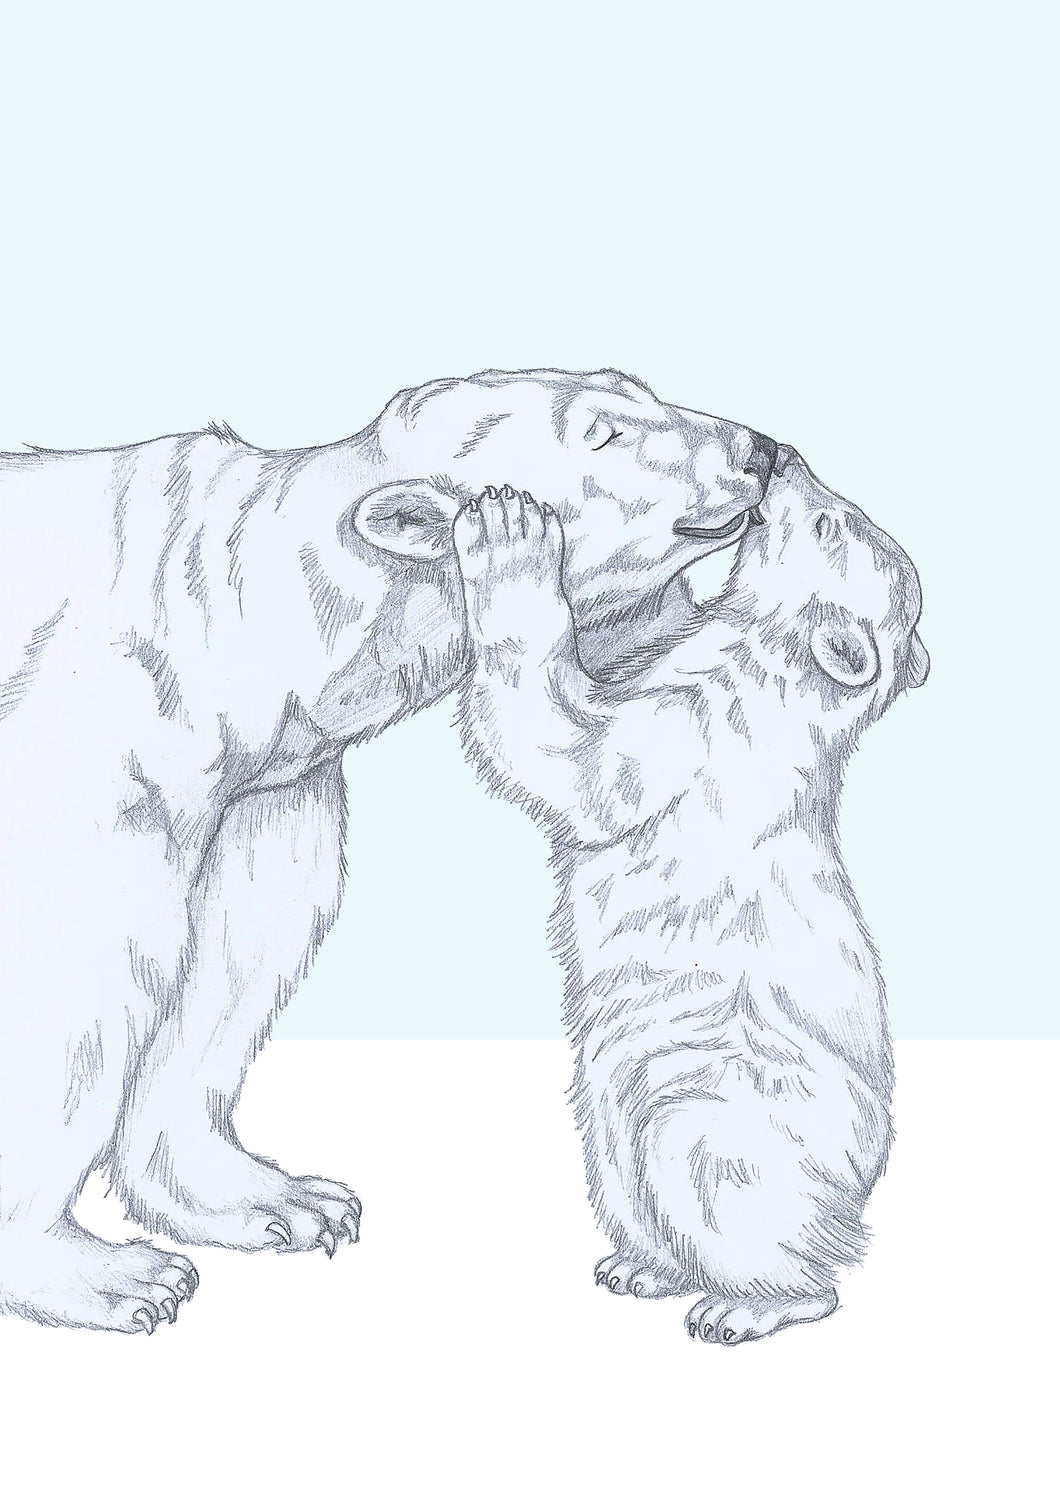 polarbear kisses